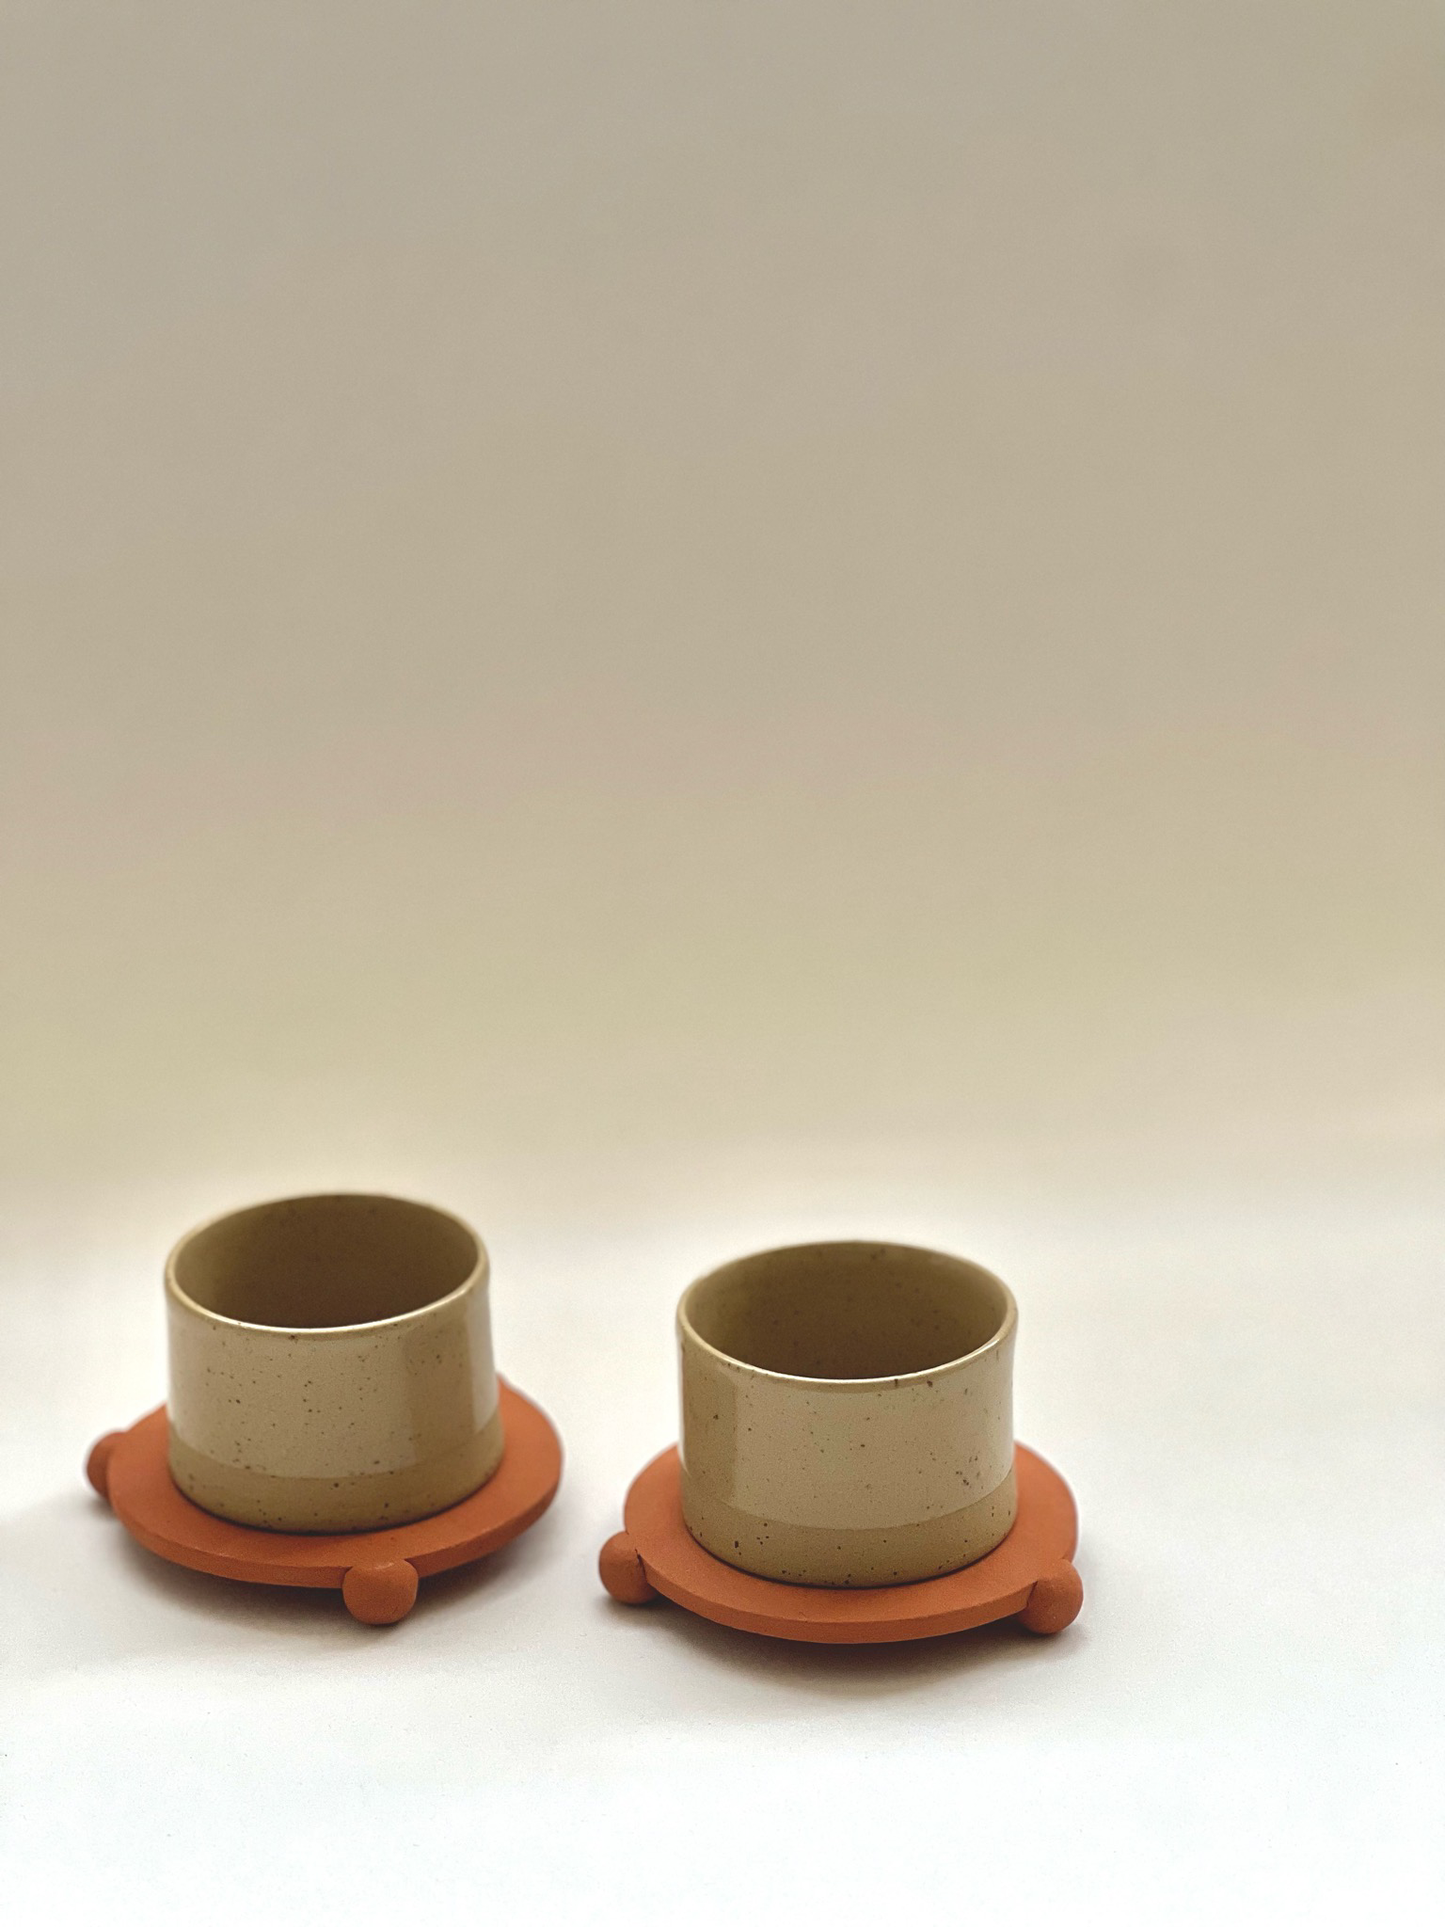 3 oz handleless cup with terracotta ball legs saucer